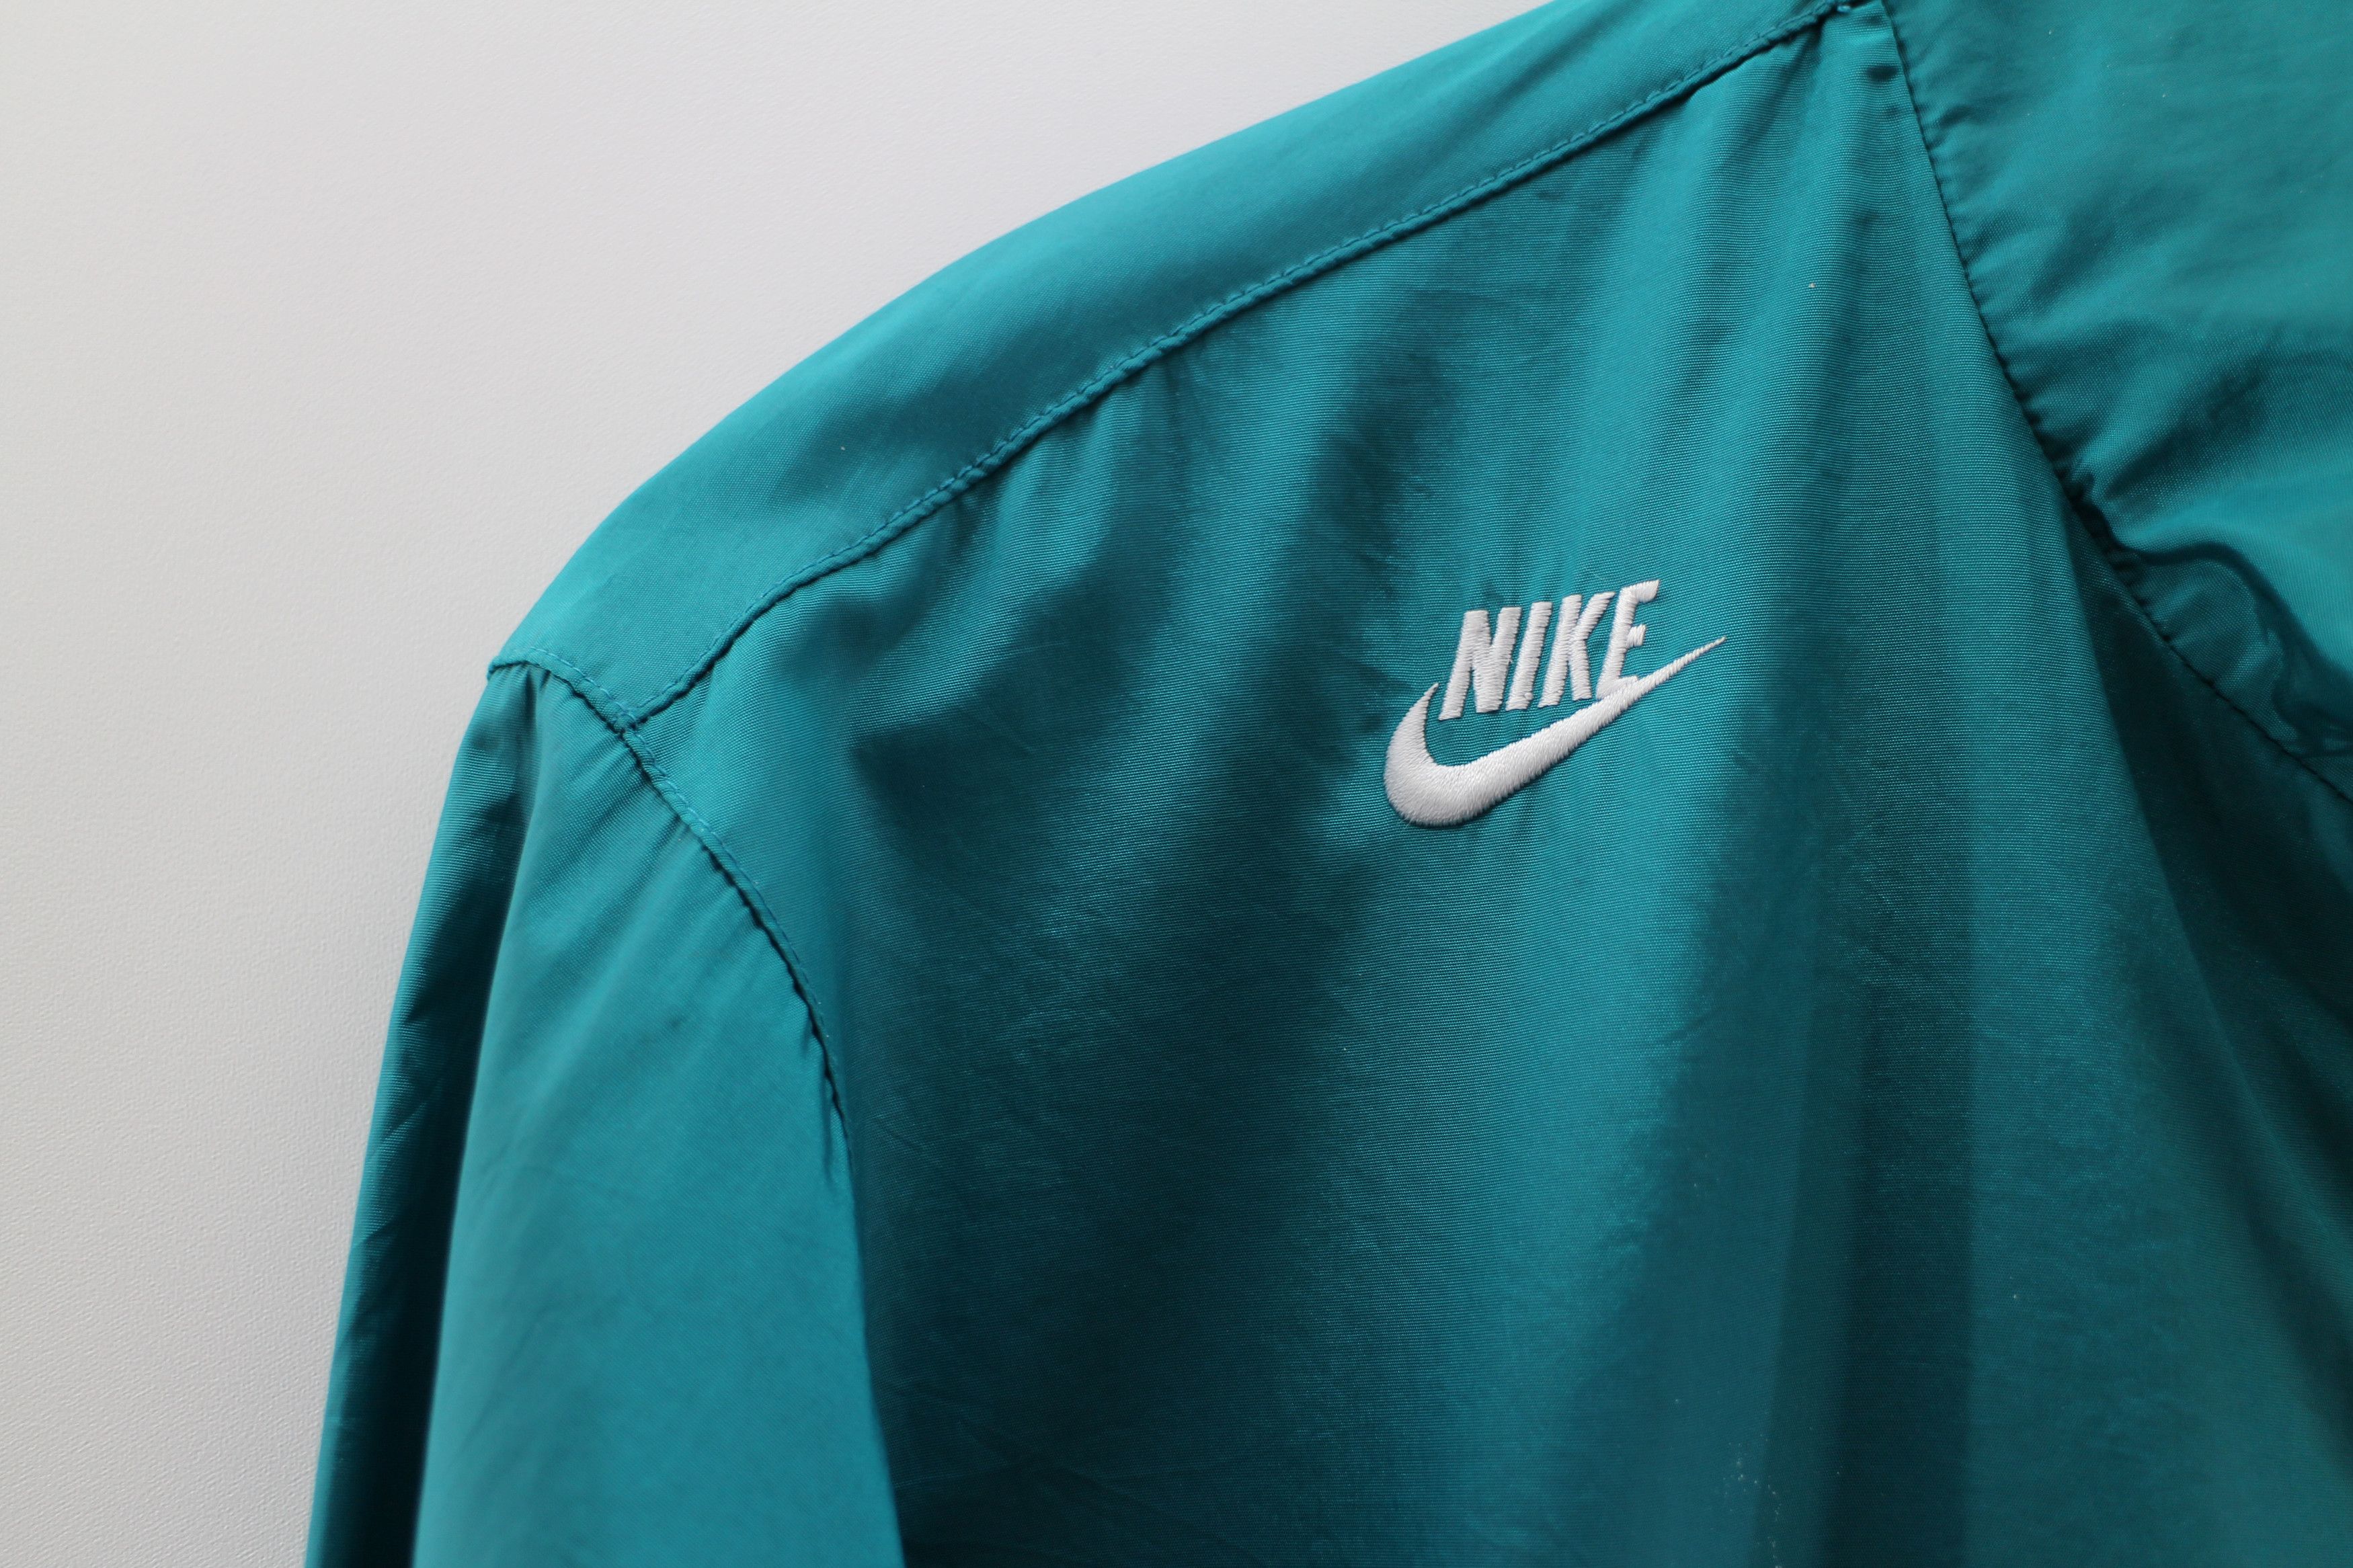 Nike NIKE Swoosh Windbreaker Jacket Unisex Vintage 90s Size M Size US M / EU 48-50 / 2 - 2 Preview